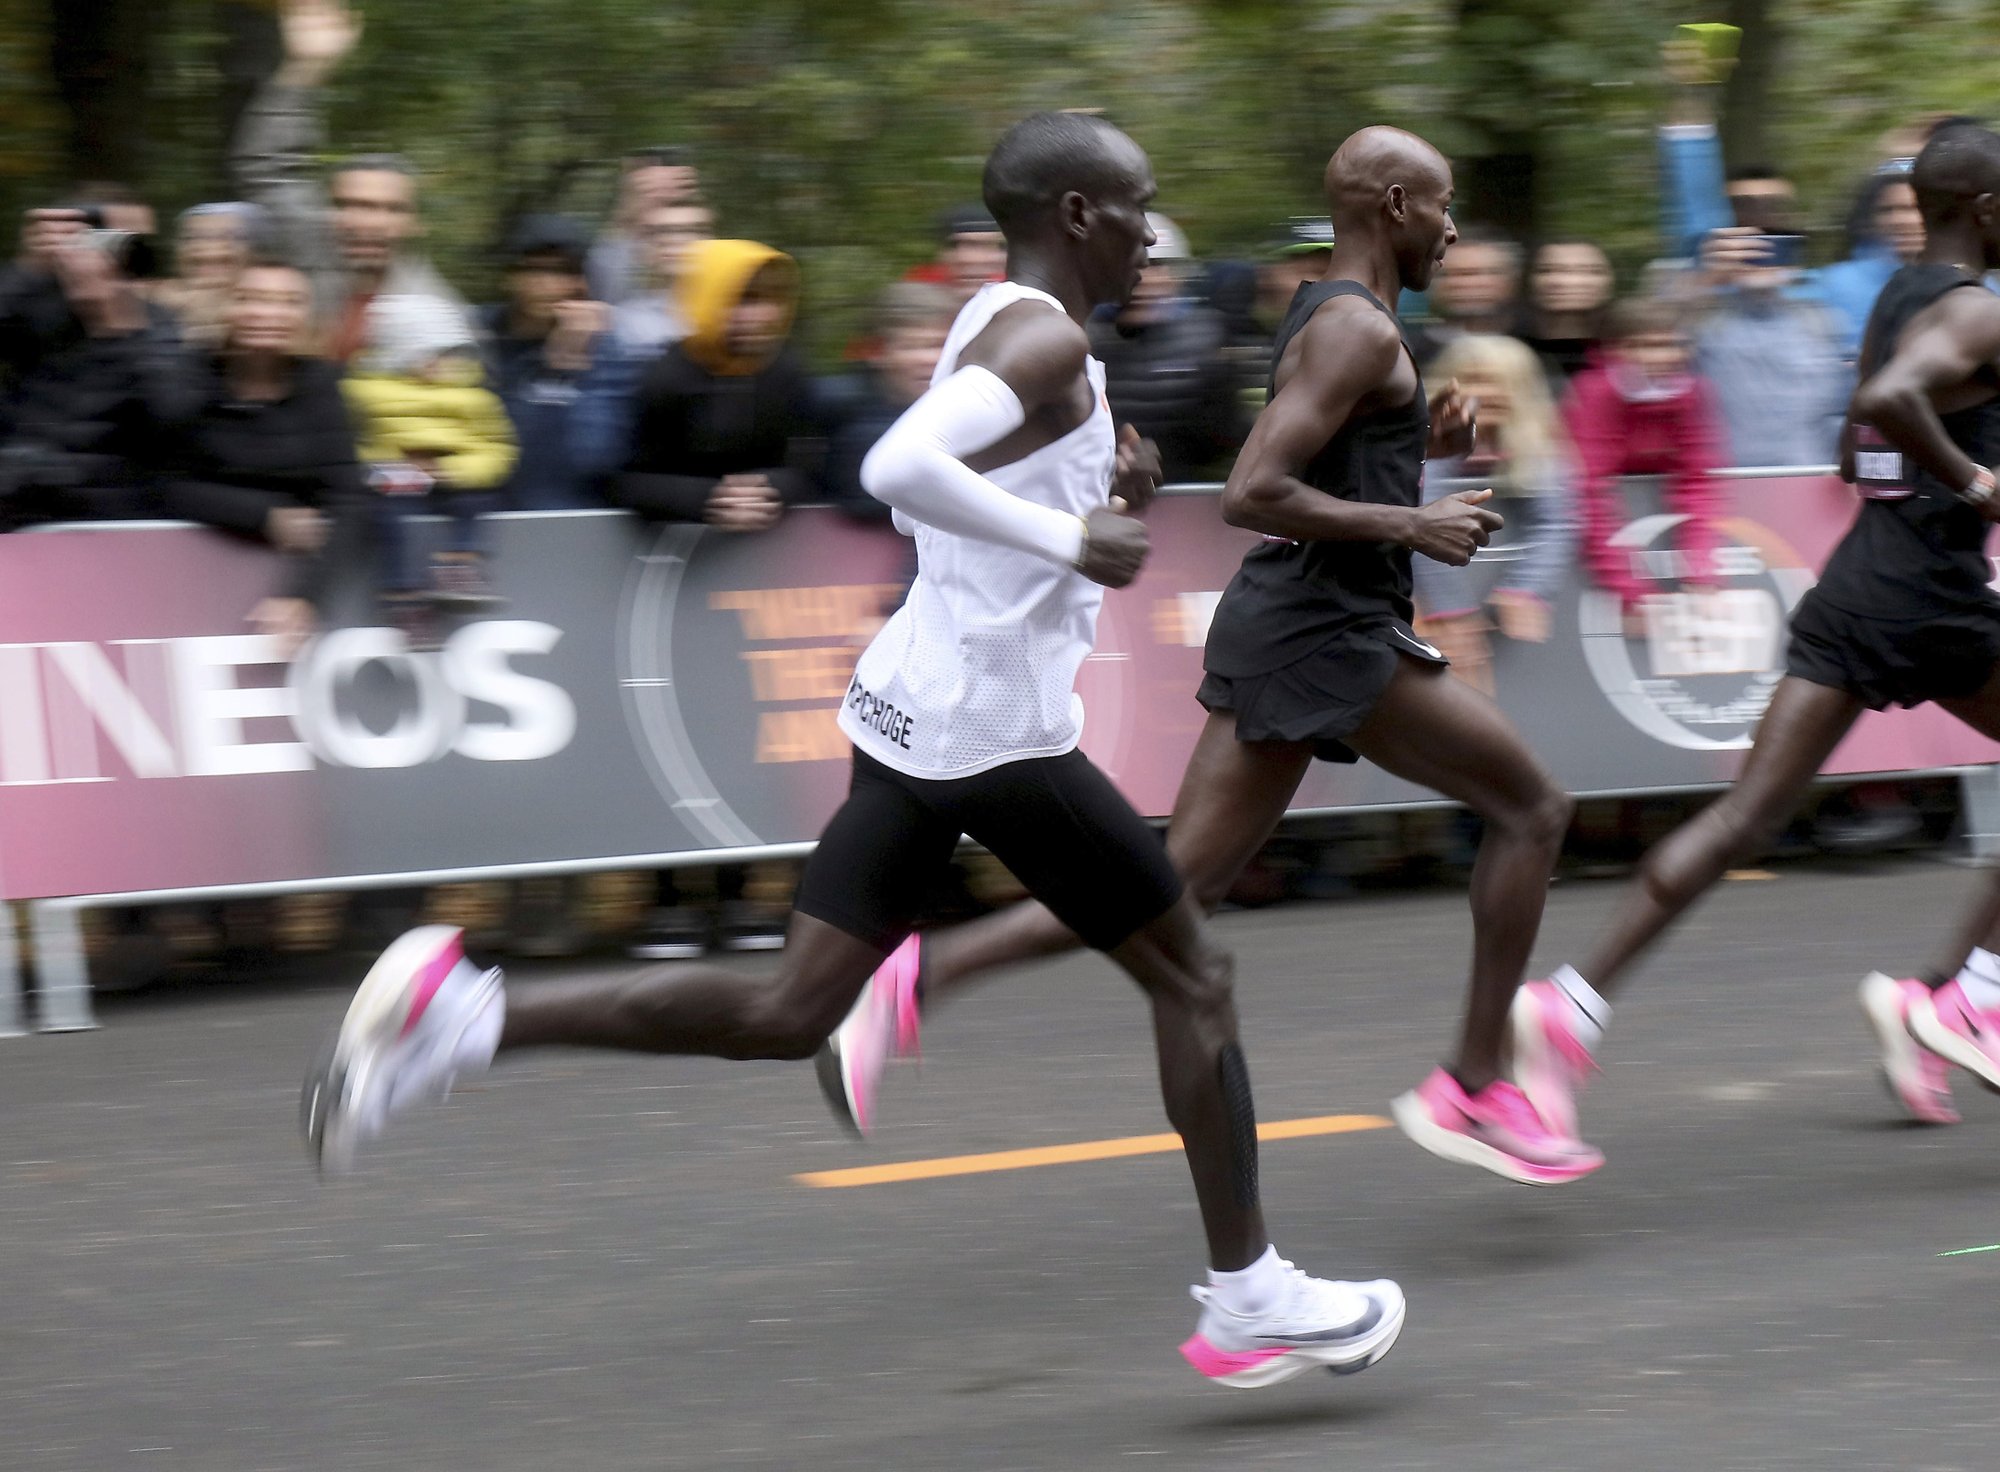 A step ahead? Nike's Vaporfly shoe changing marathon game | AP News